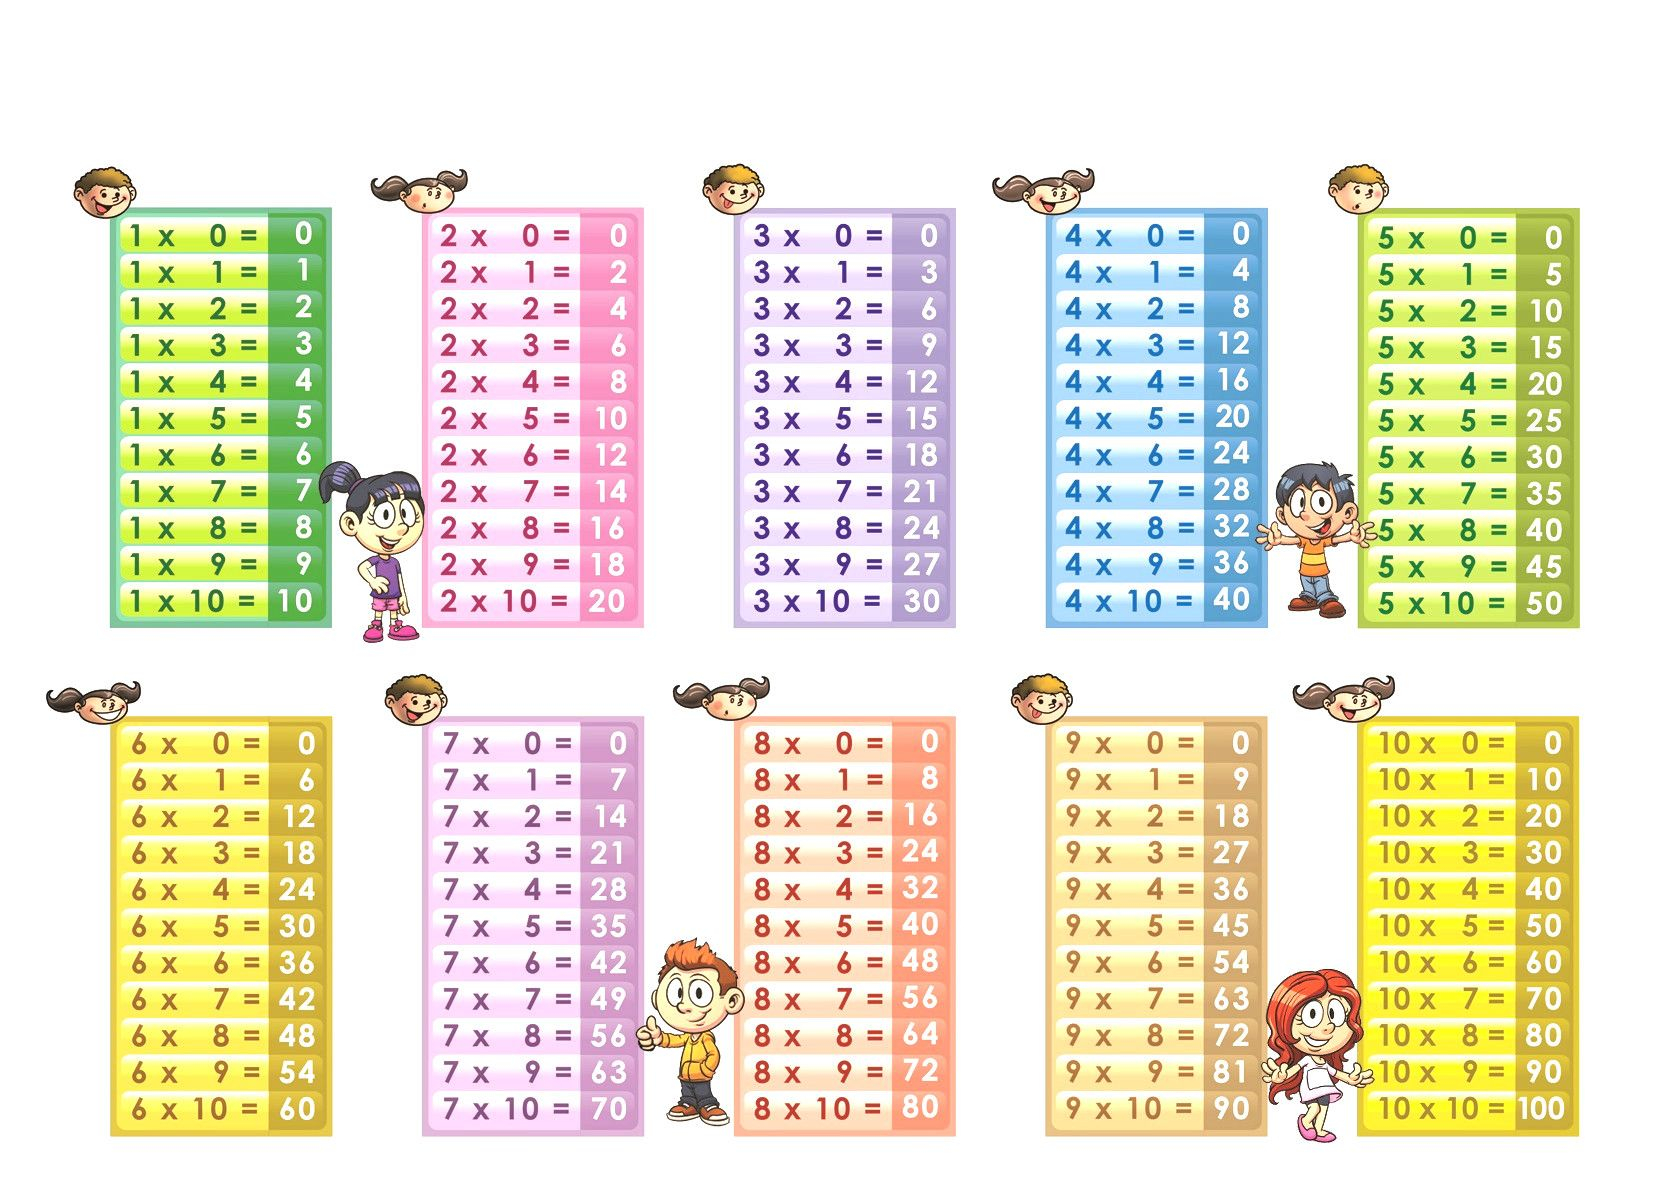 Multiplication Chart Printable 1 10